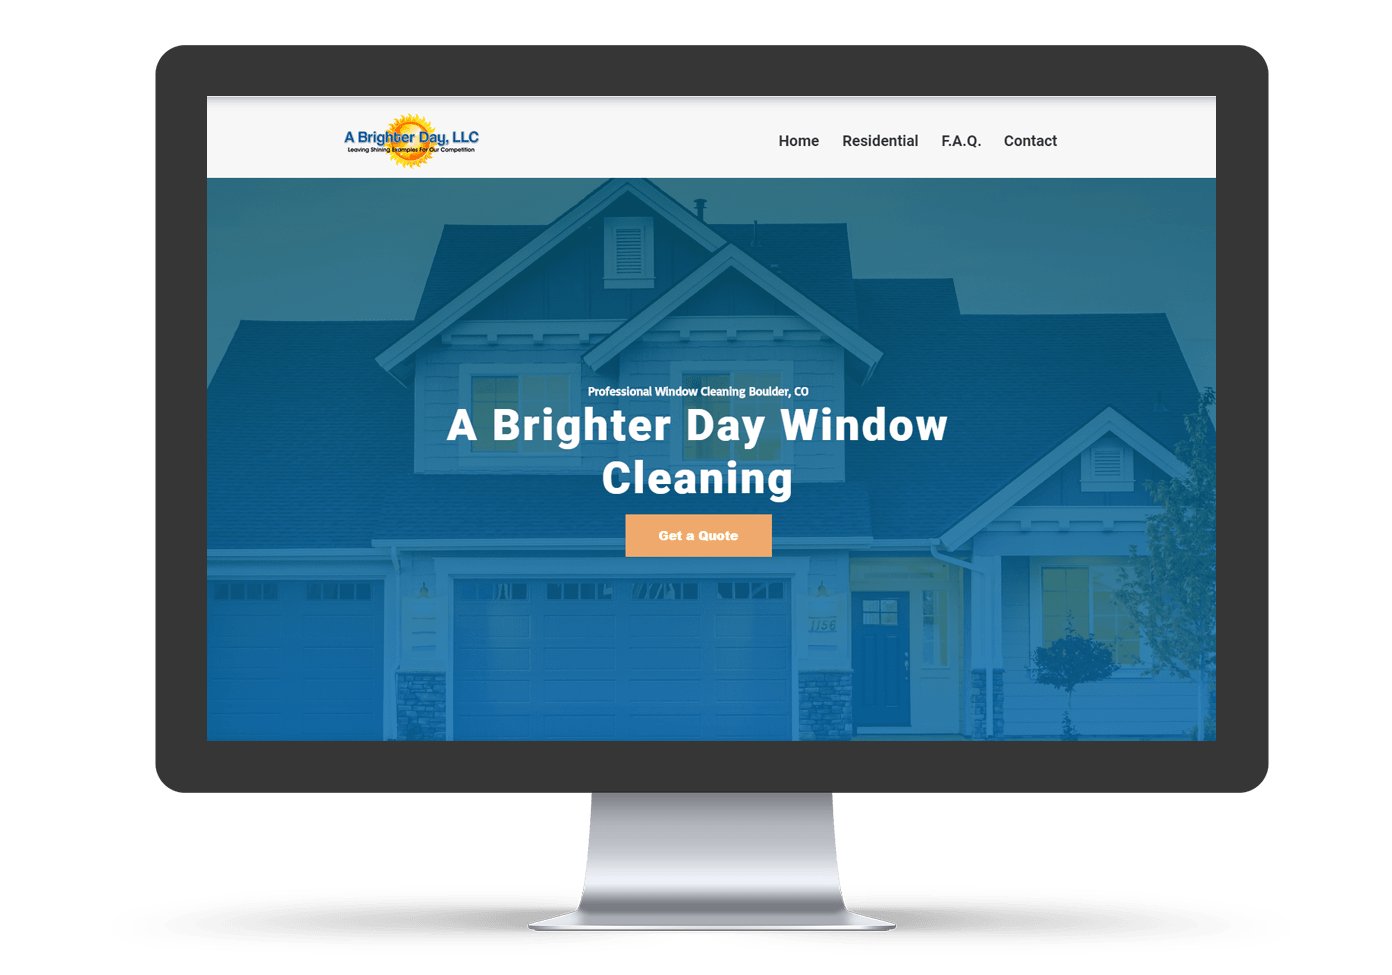 A Brighter Day Window Cleaning Service Website - Ryan Bucci Portfolio